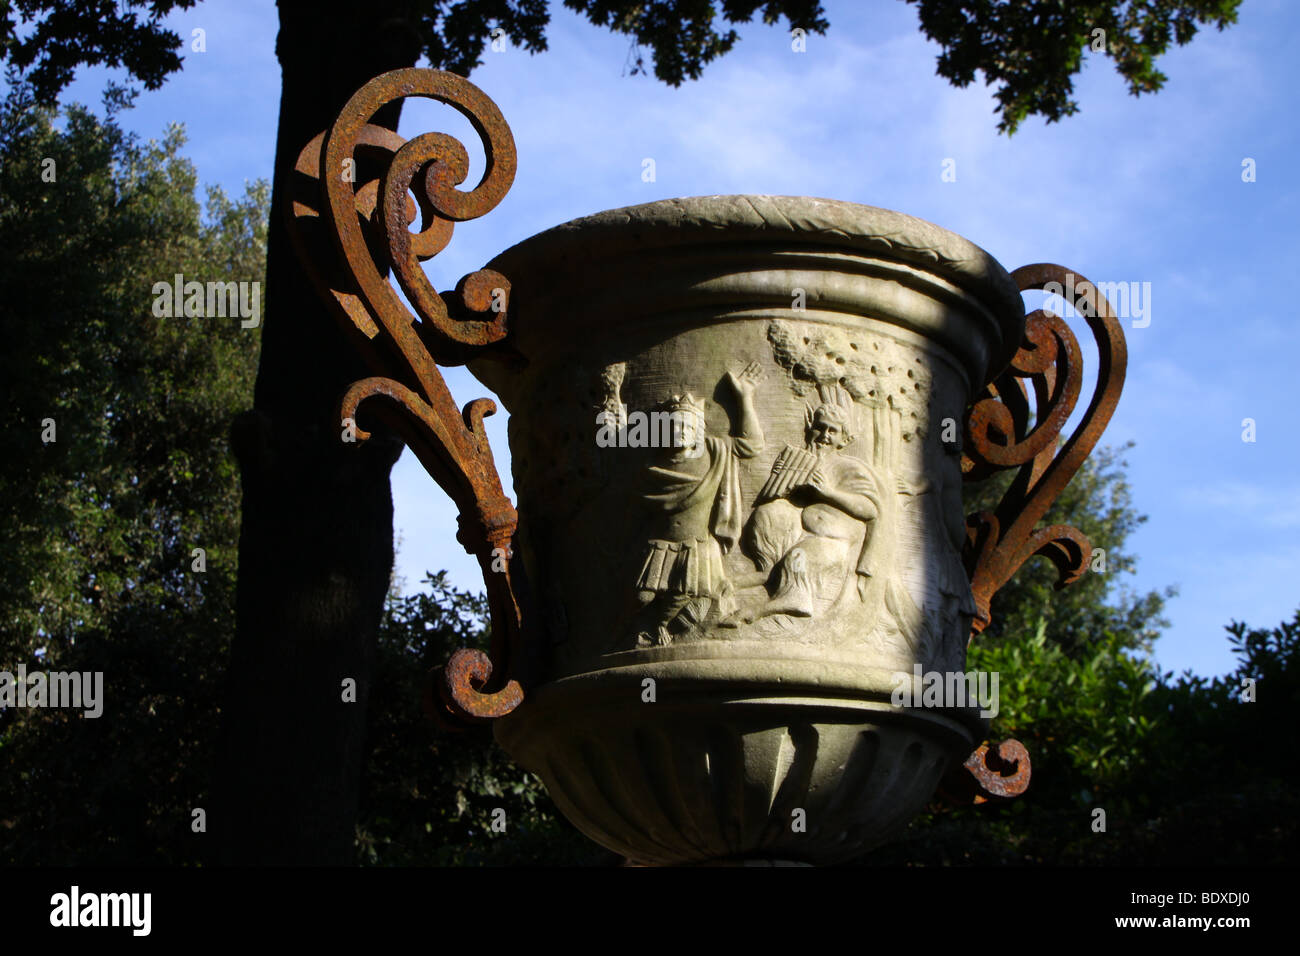 Bas relief on ancient roman vase, Quirinale gardens, Rome, Italy. Stock Photo